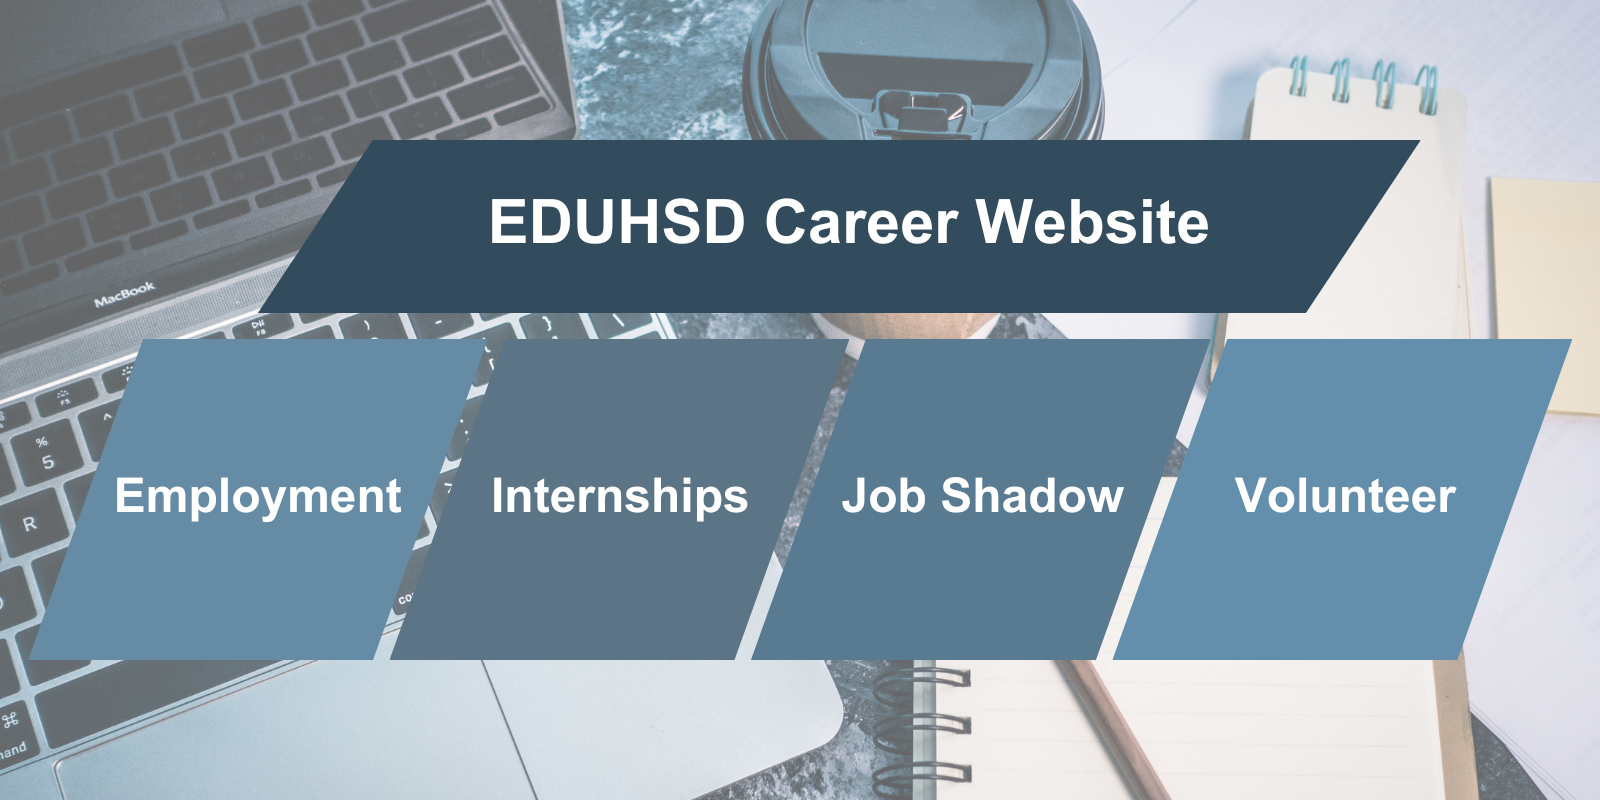 EDUHSD Career Website